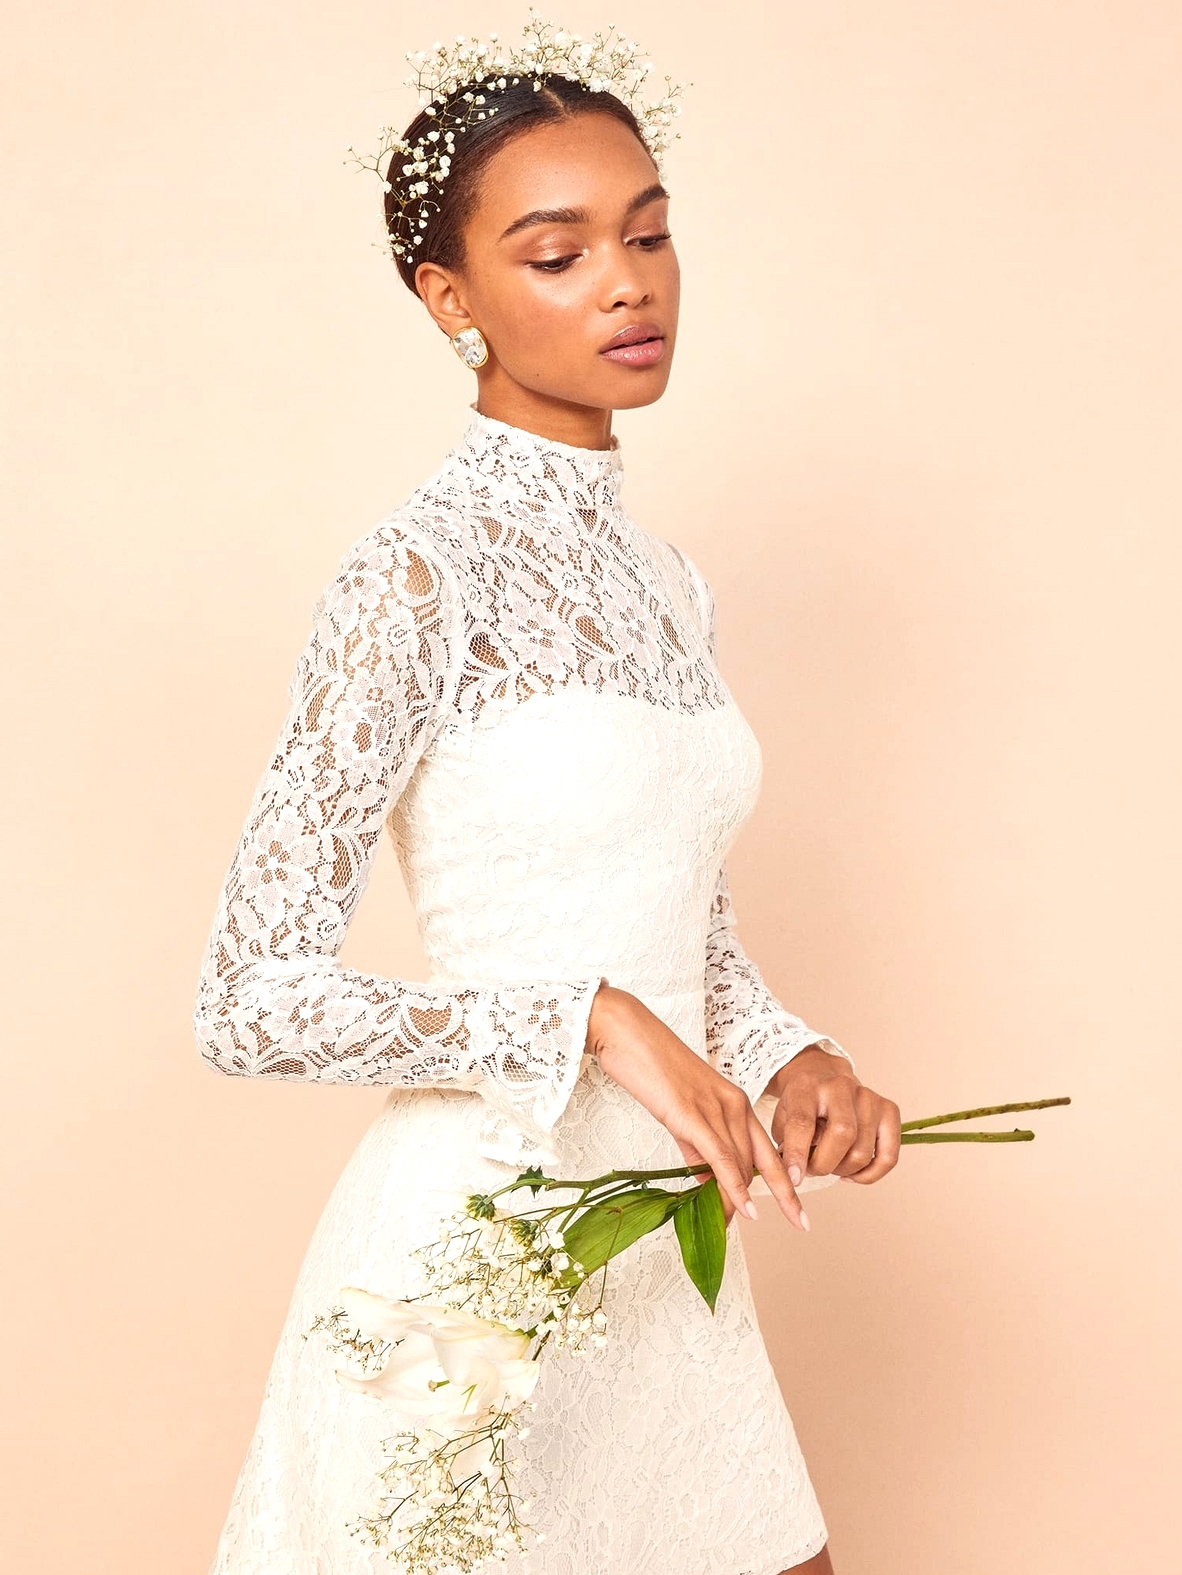 short lace wedding dress